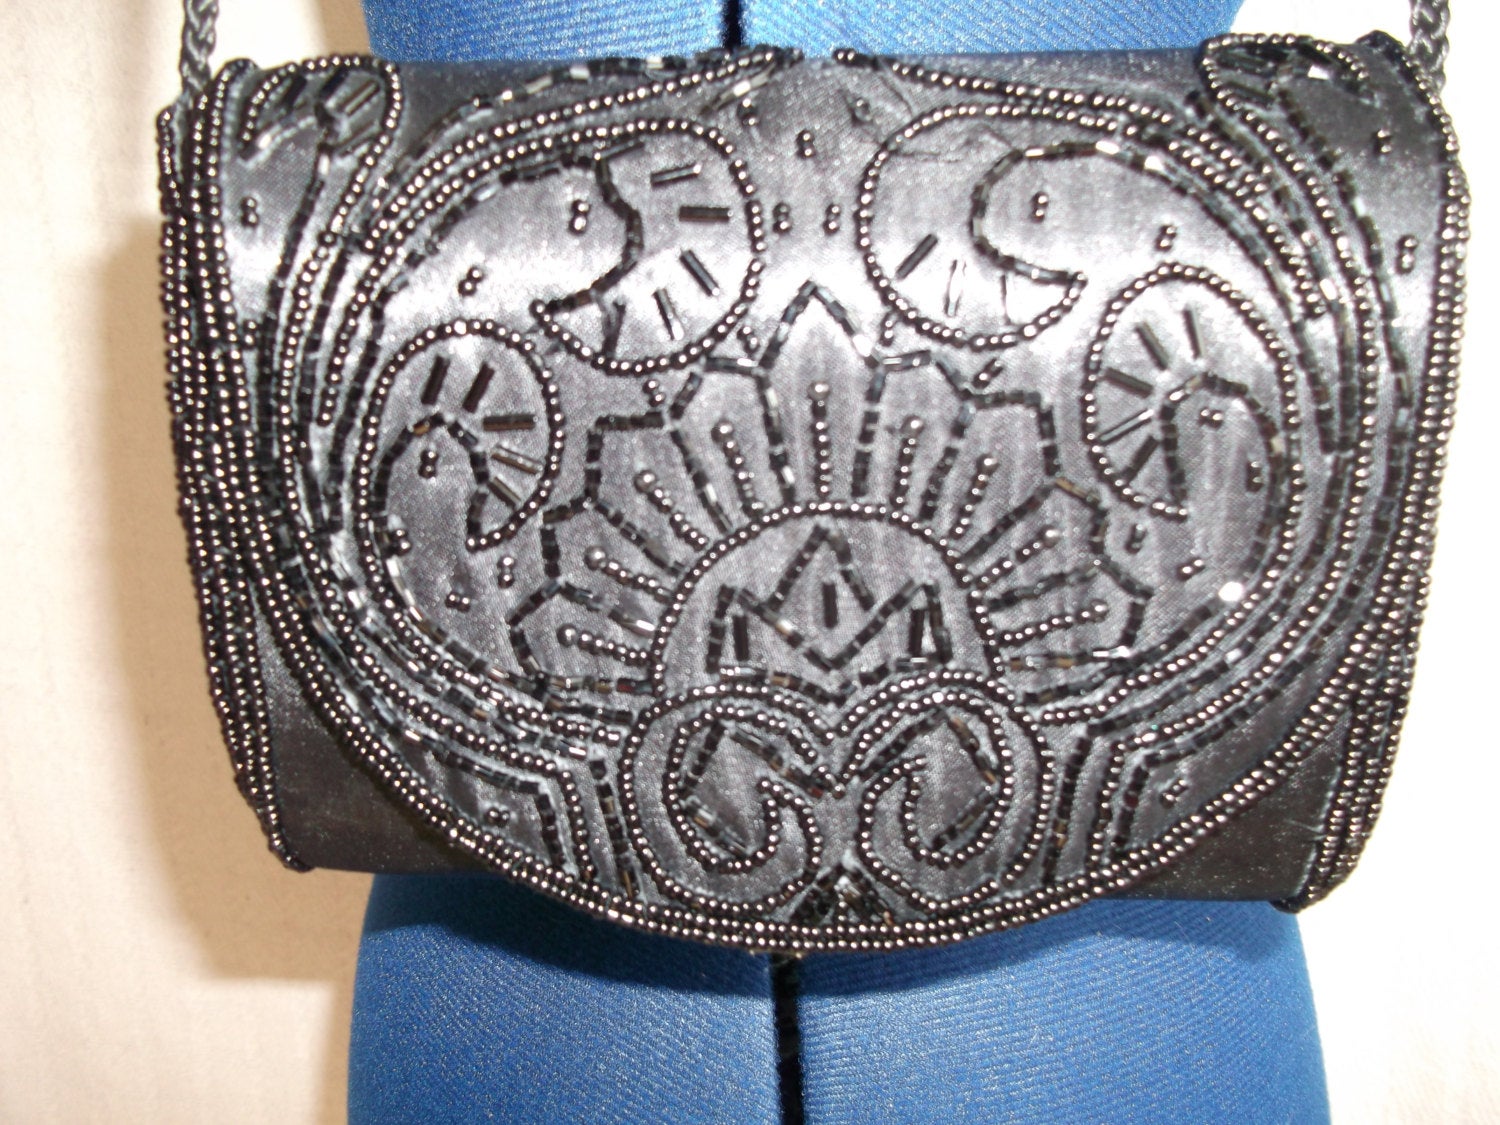 VIntage Glam Unusual black satin shoulder/clutch bag with beadwork detail, fab gift item or party wear accessory Wonkey Donkey Bazaar